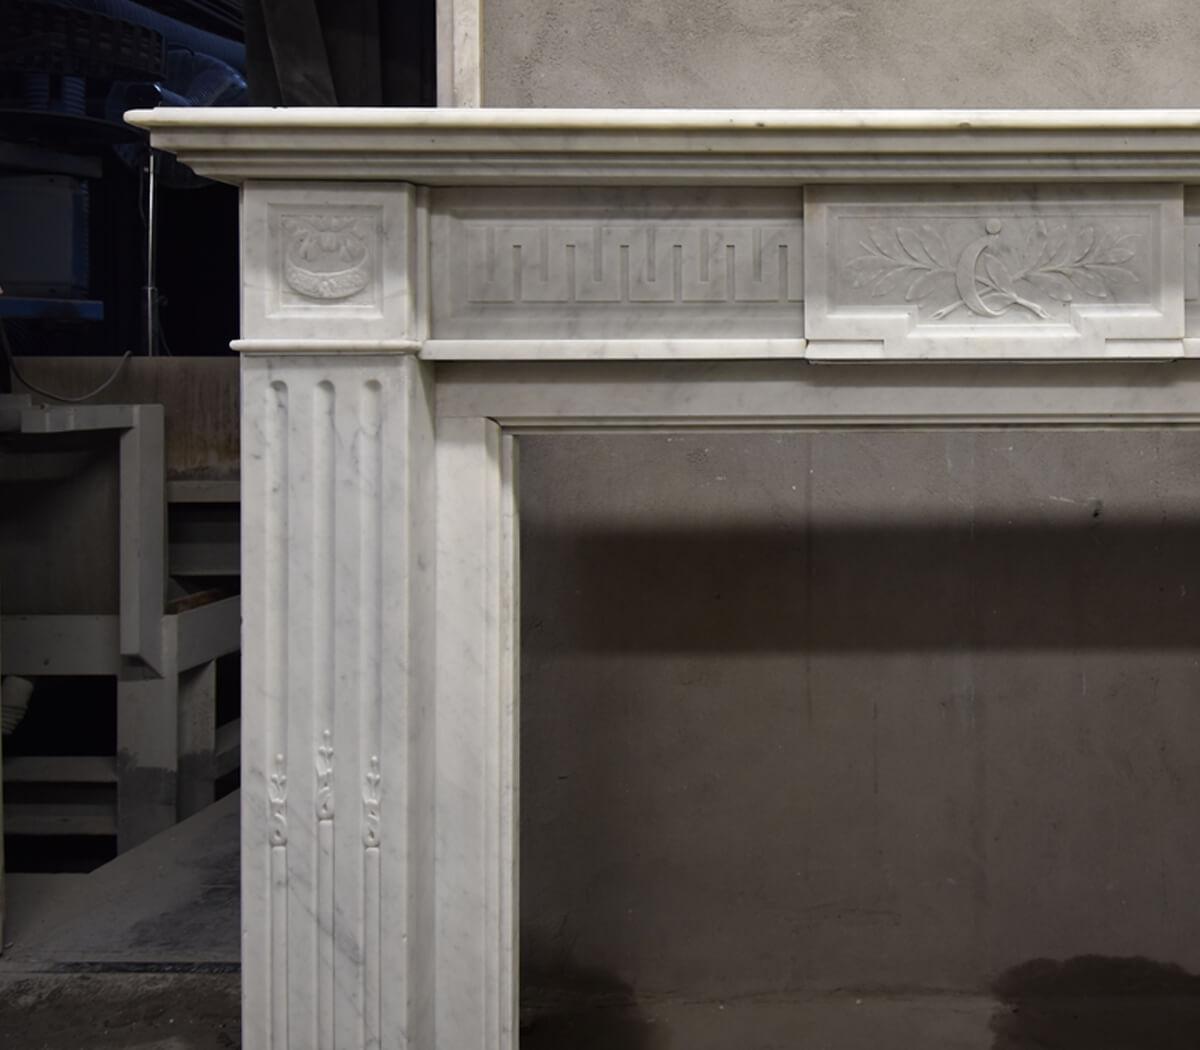 Nice Carrara marble Louis XVI fireplace mantel to place
around the chimney.